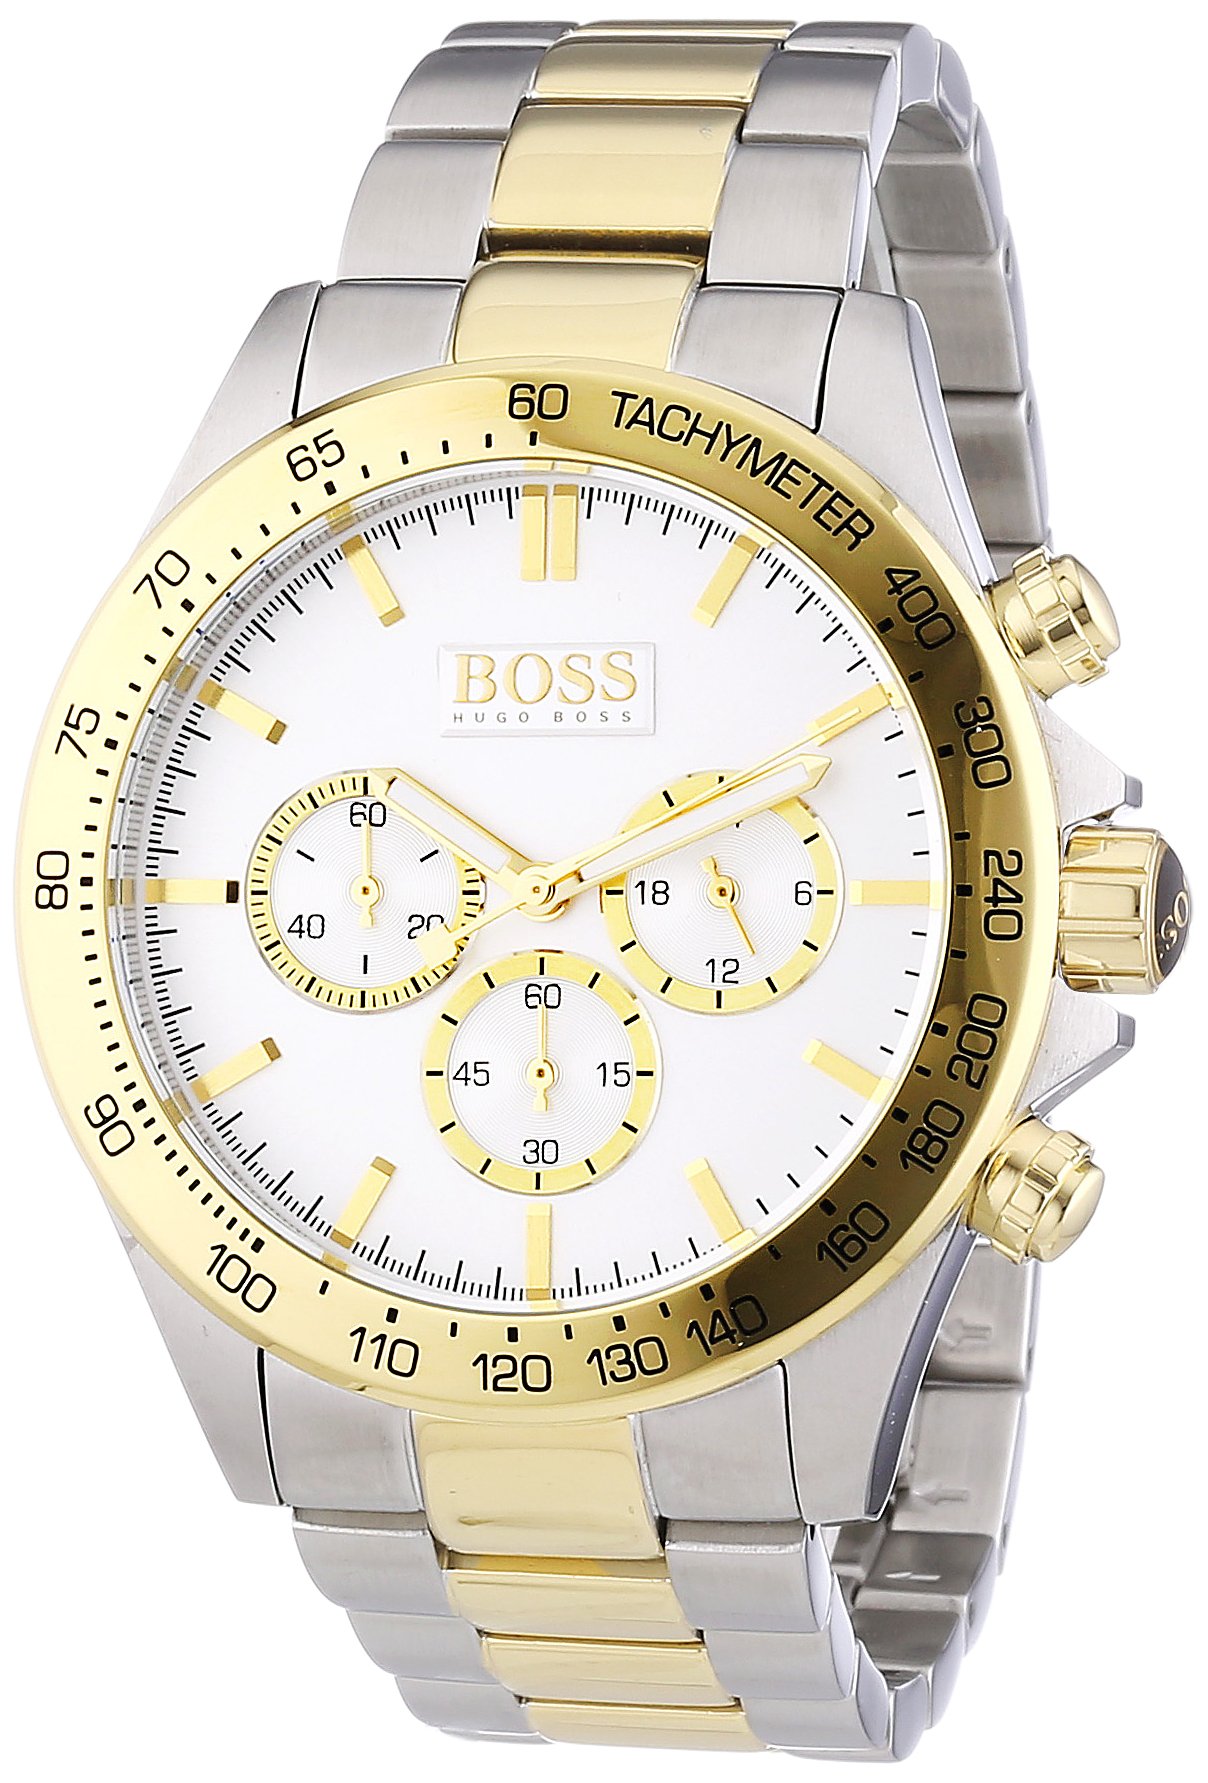 Boss HB-6030 1512960 Mens Chronograph Screwed-in crown